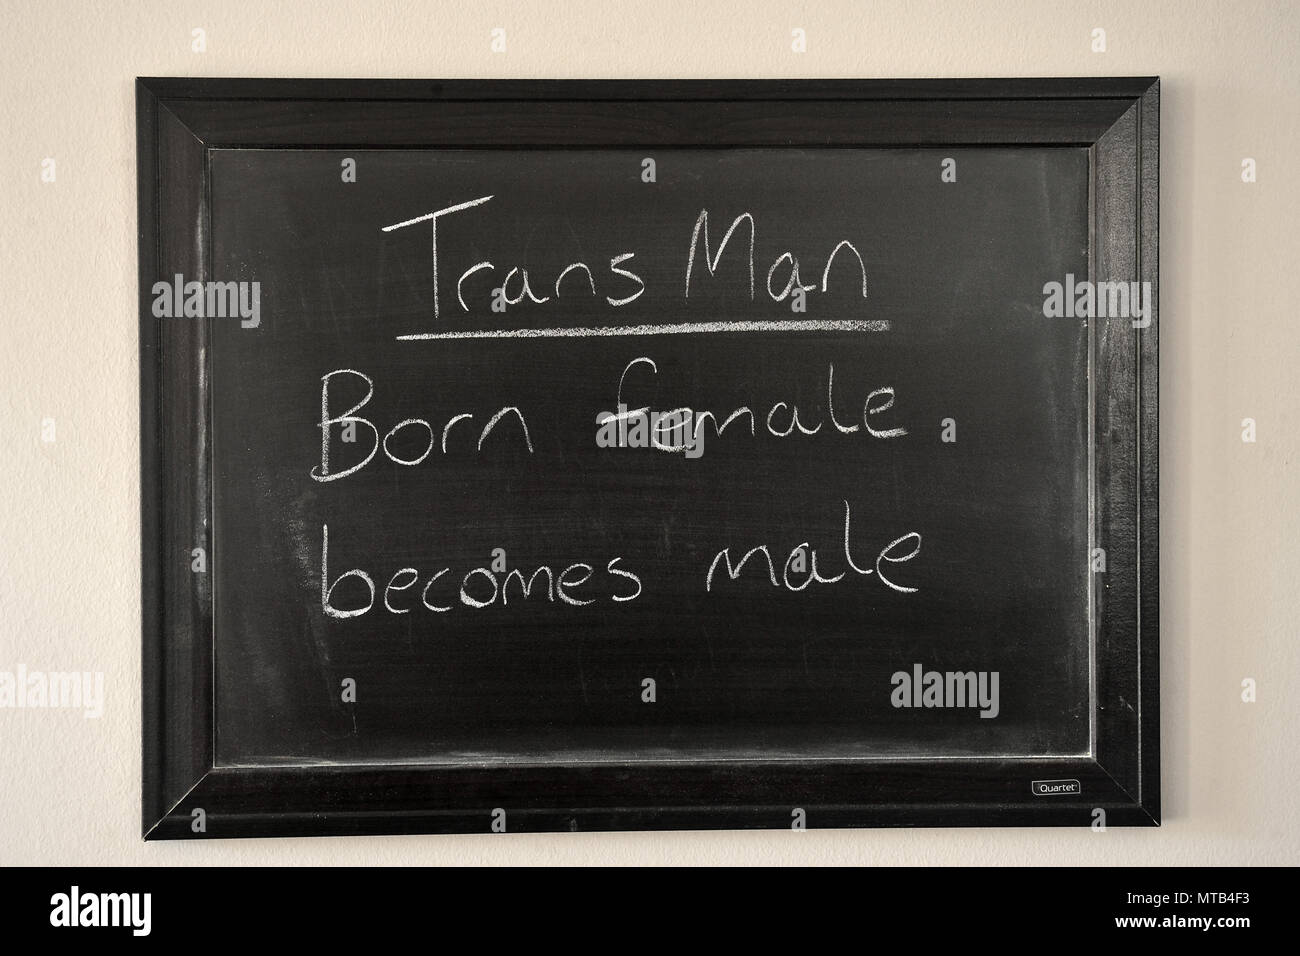 Trans man definition written in a white chalk on a wall mounted blackboard Stock Photo